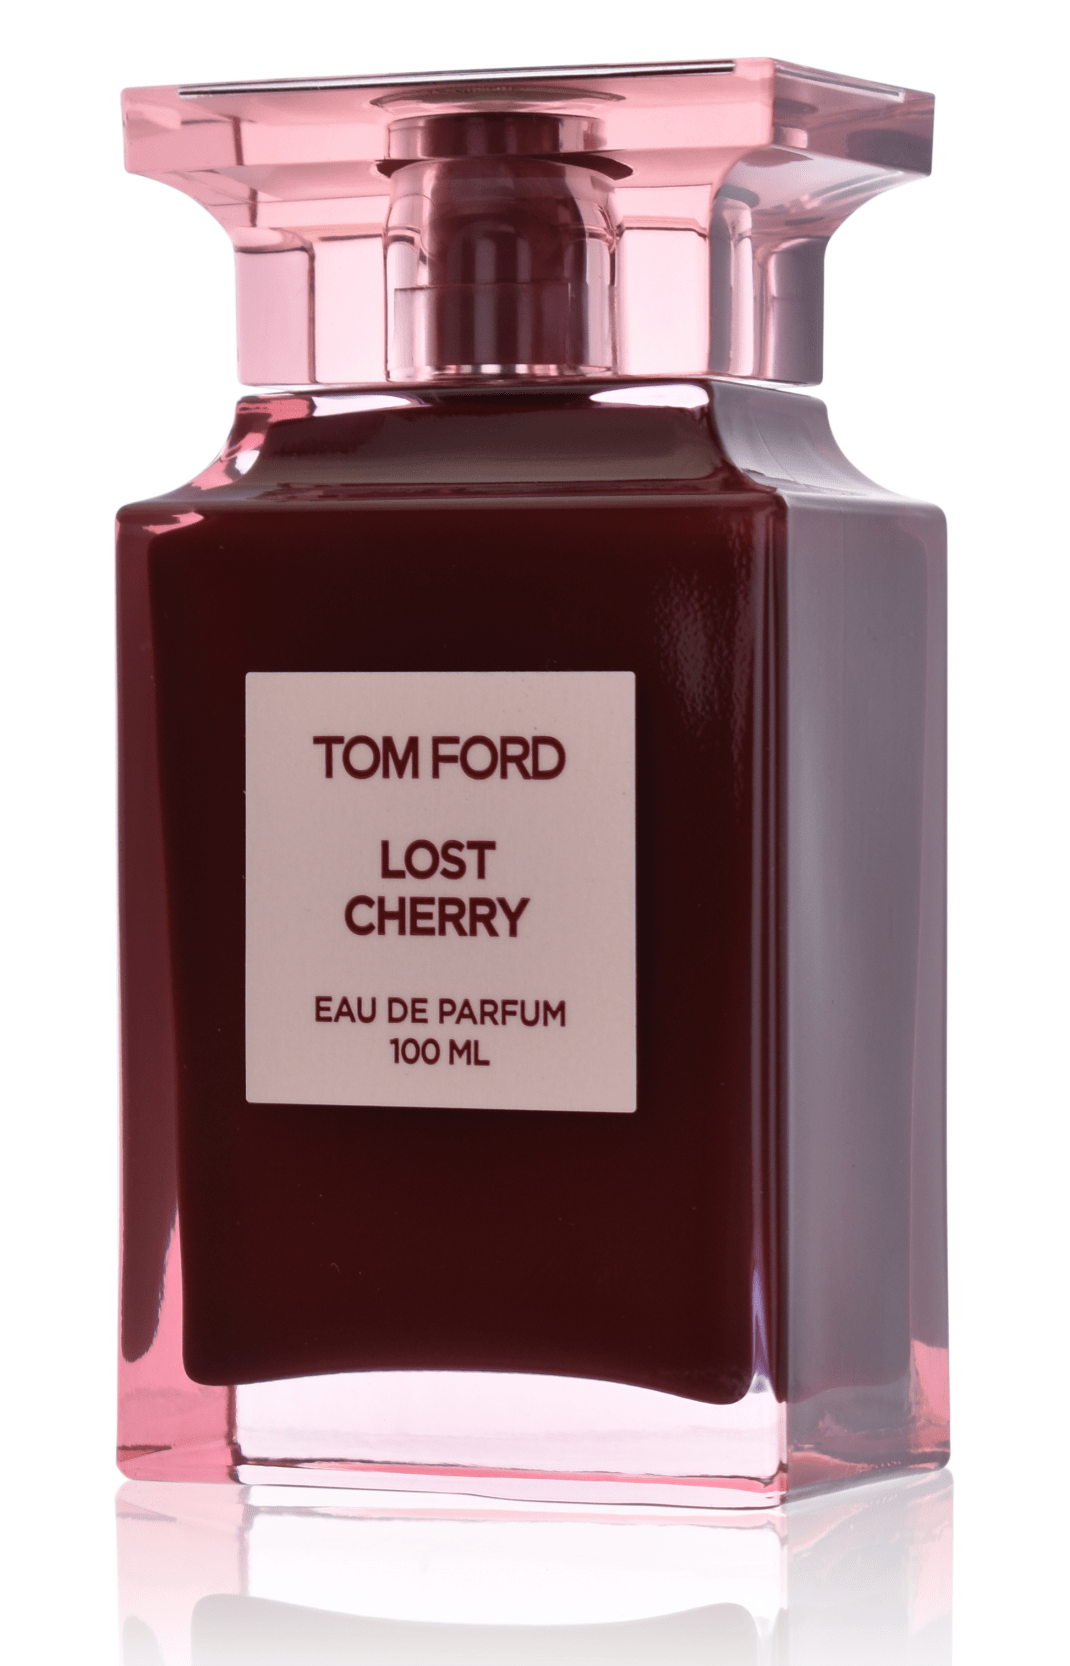 Tom Ford Lost Cherry 5 ml Eau de Parfum Abfüllung